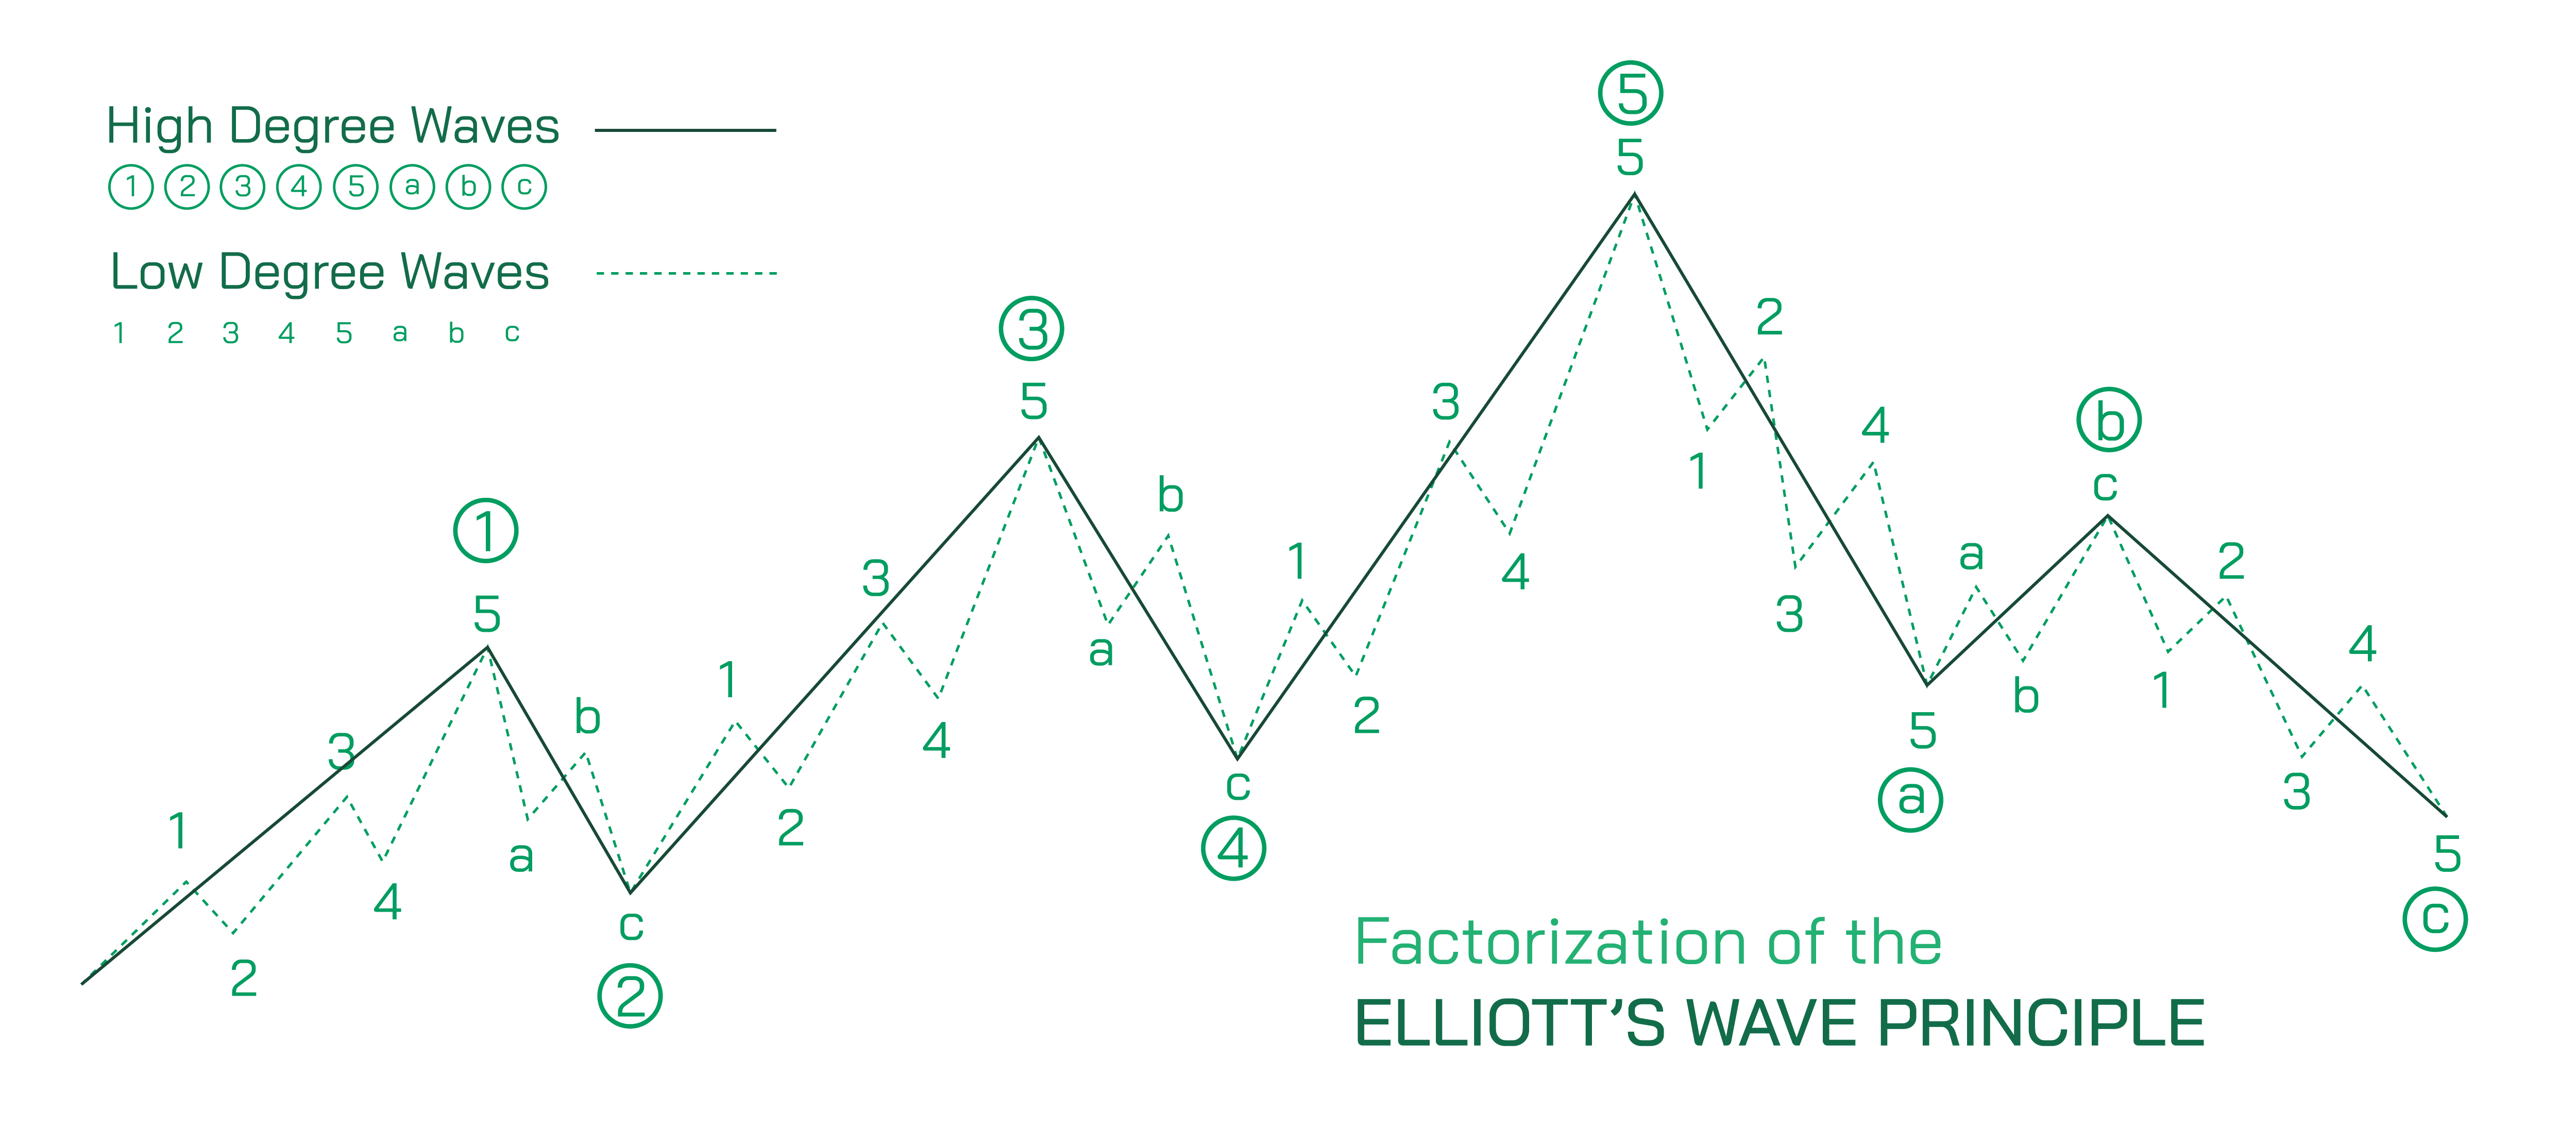 How Can I Apply the Elliott Wave Principle?